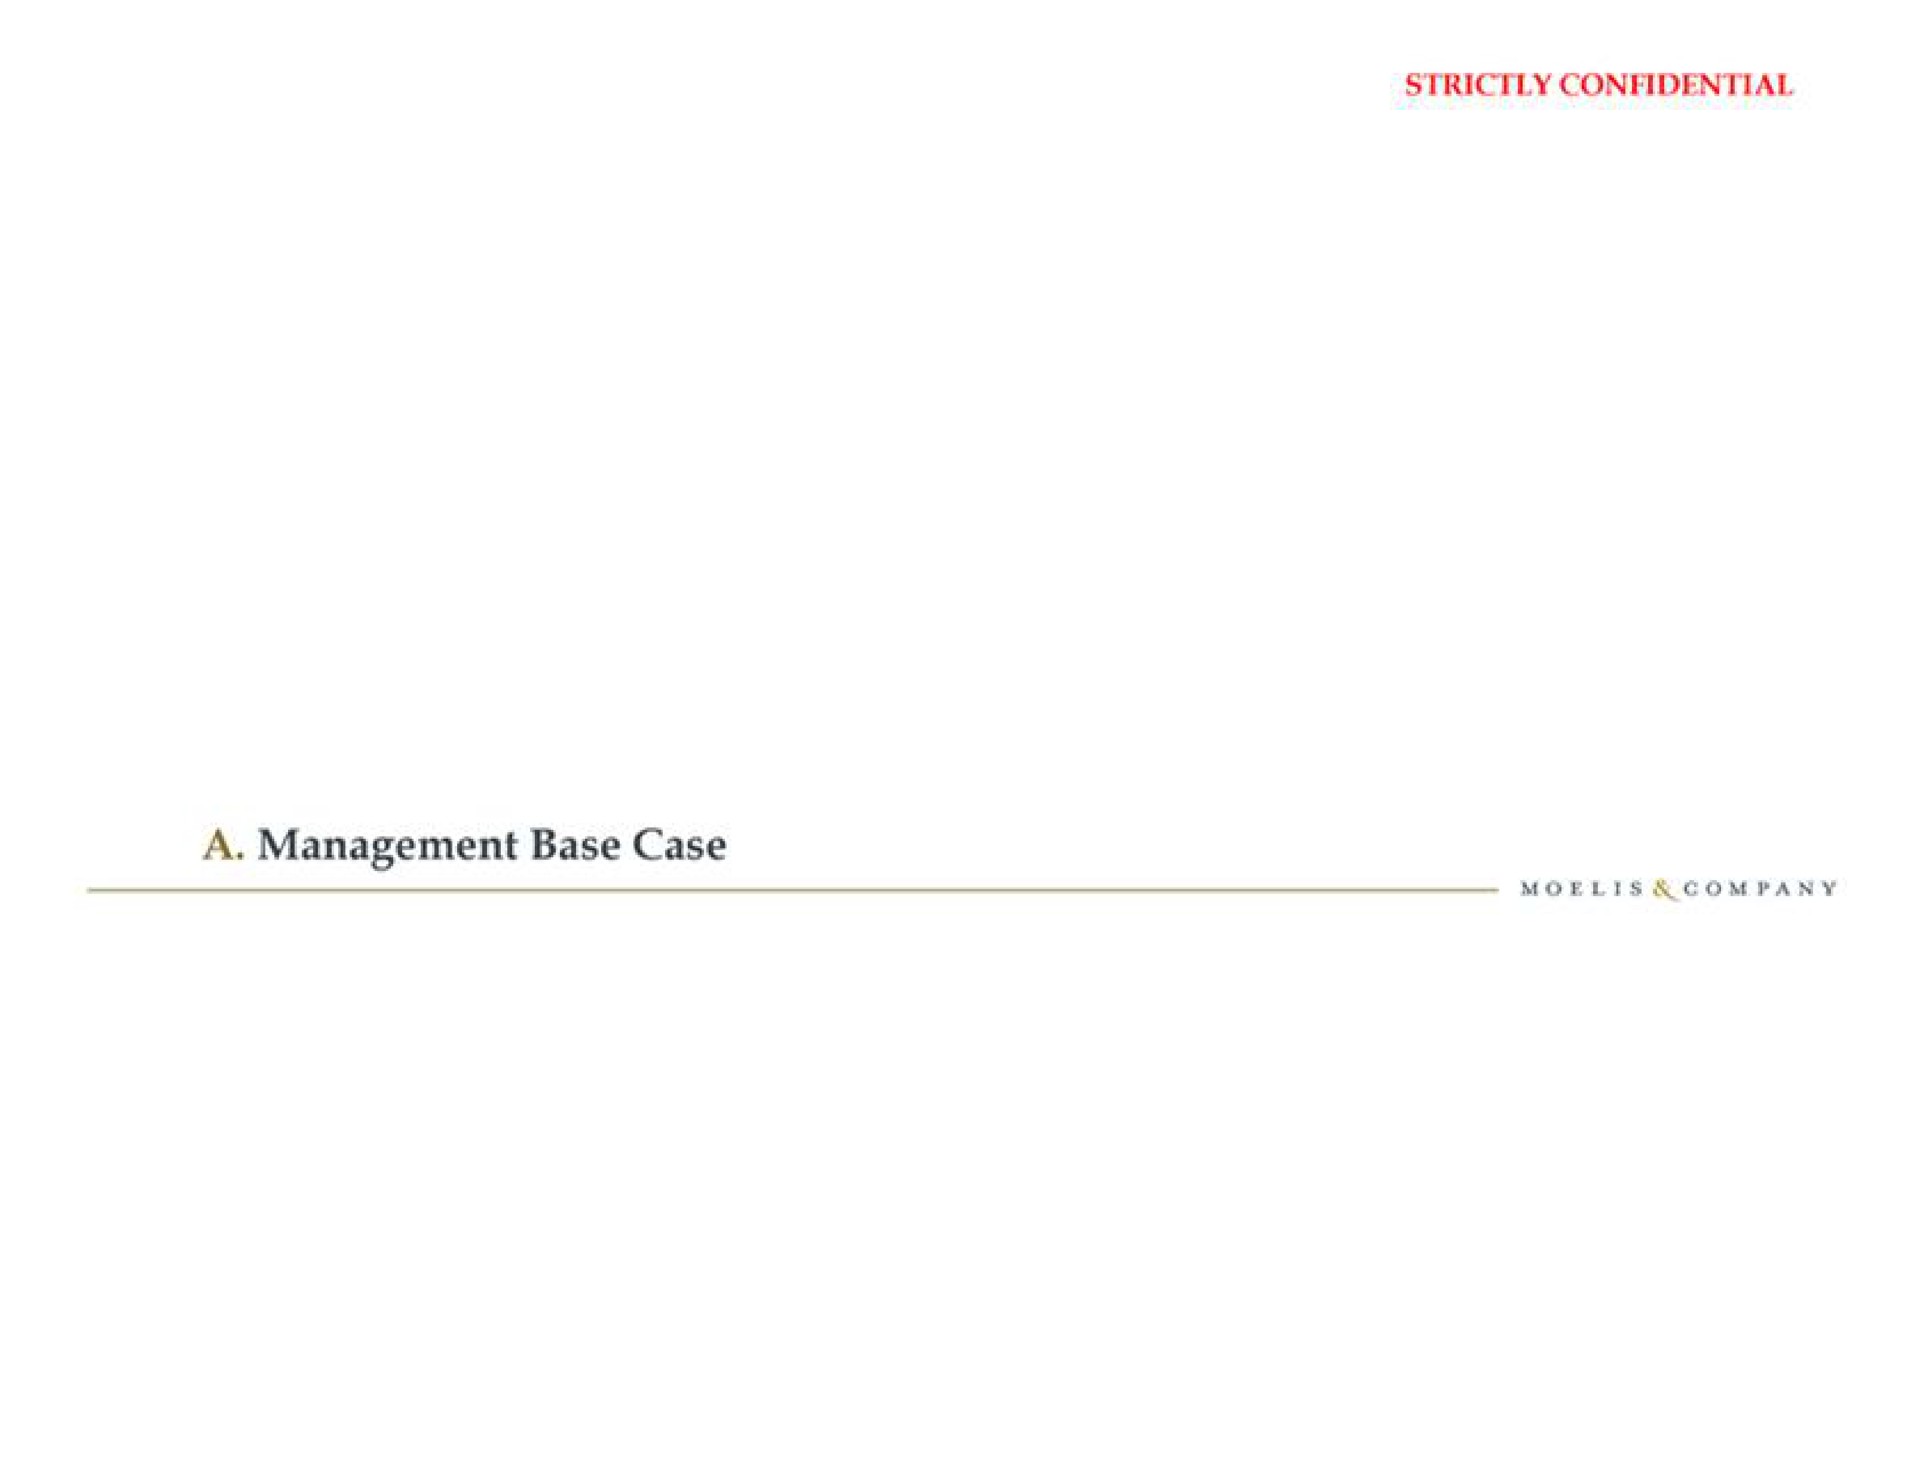 a management base case | Moelis & Company